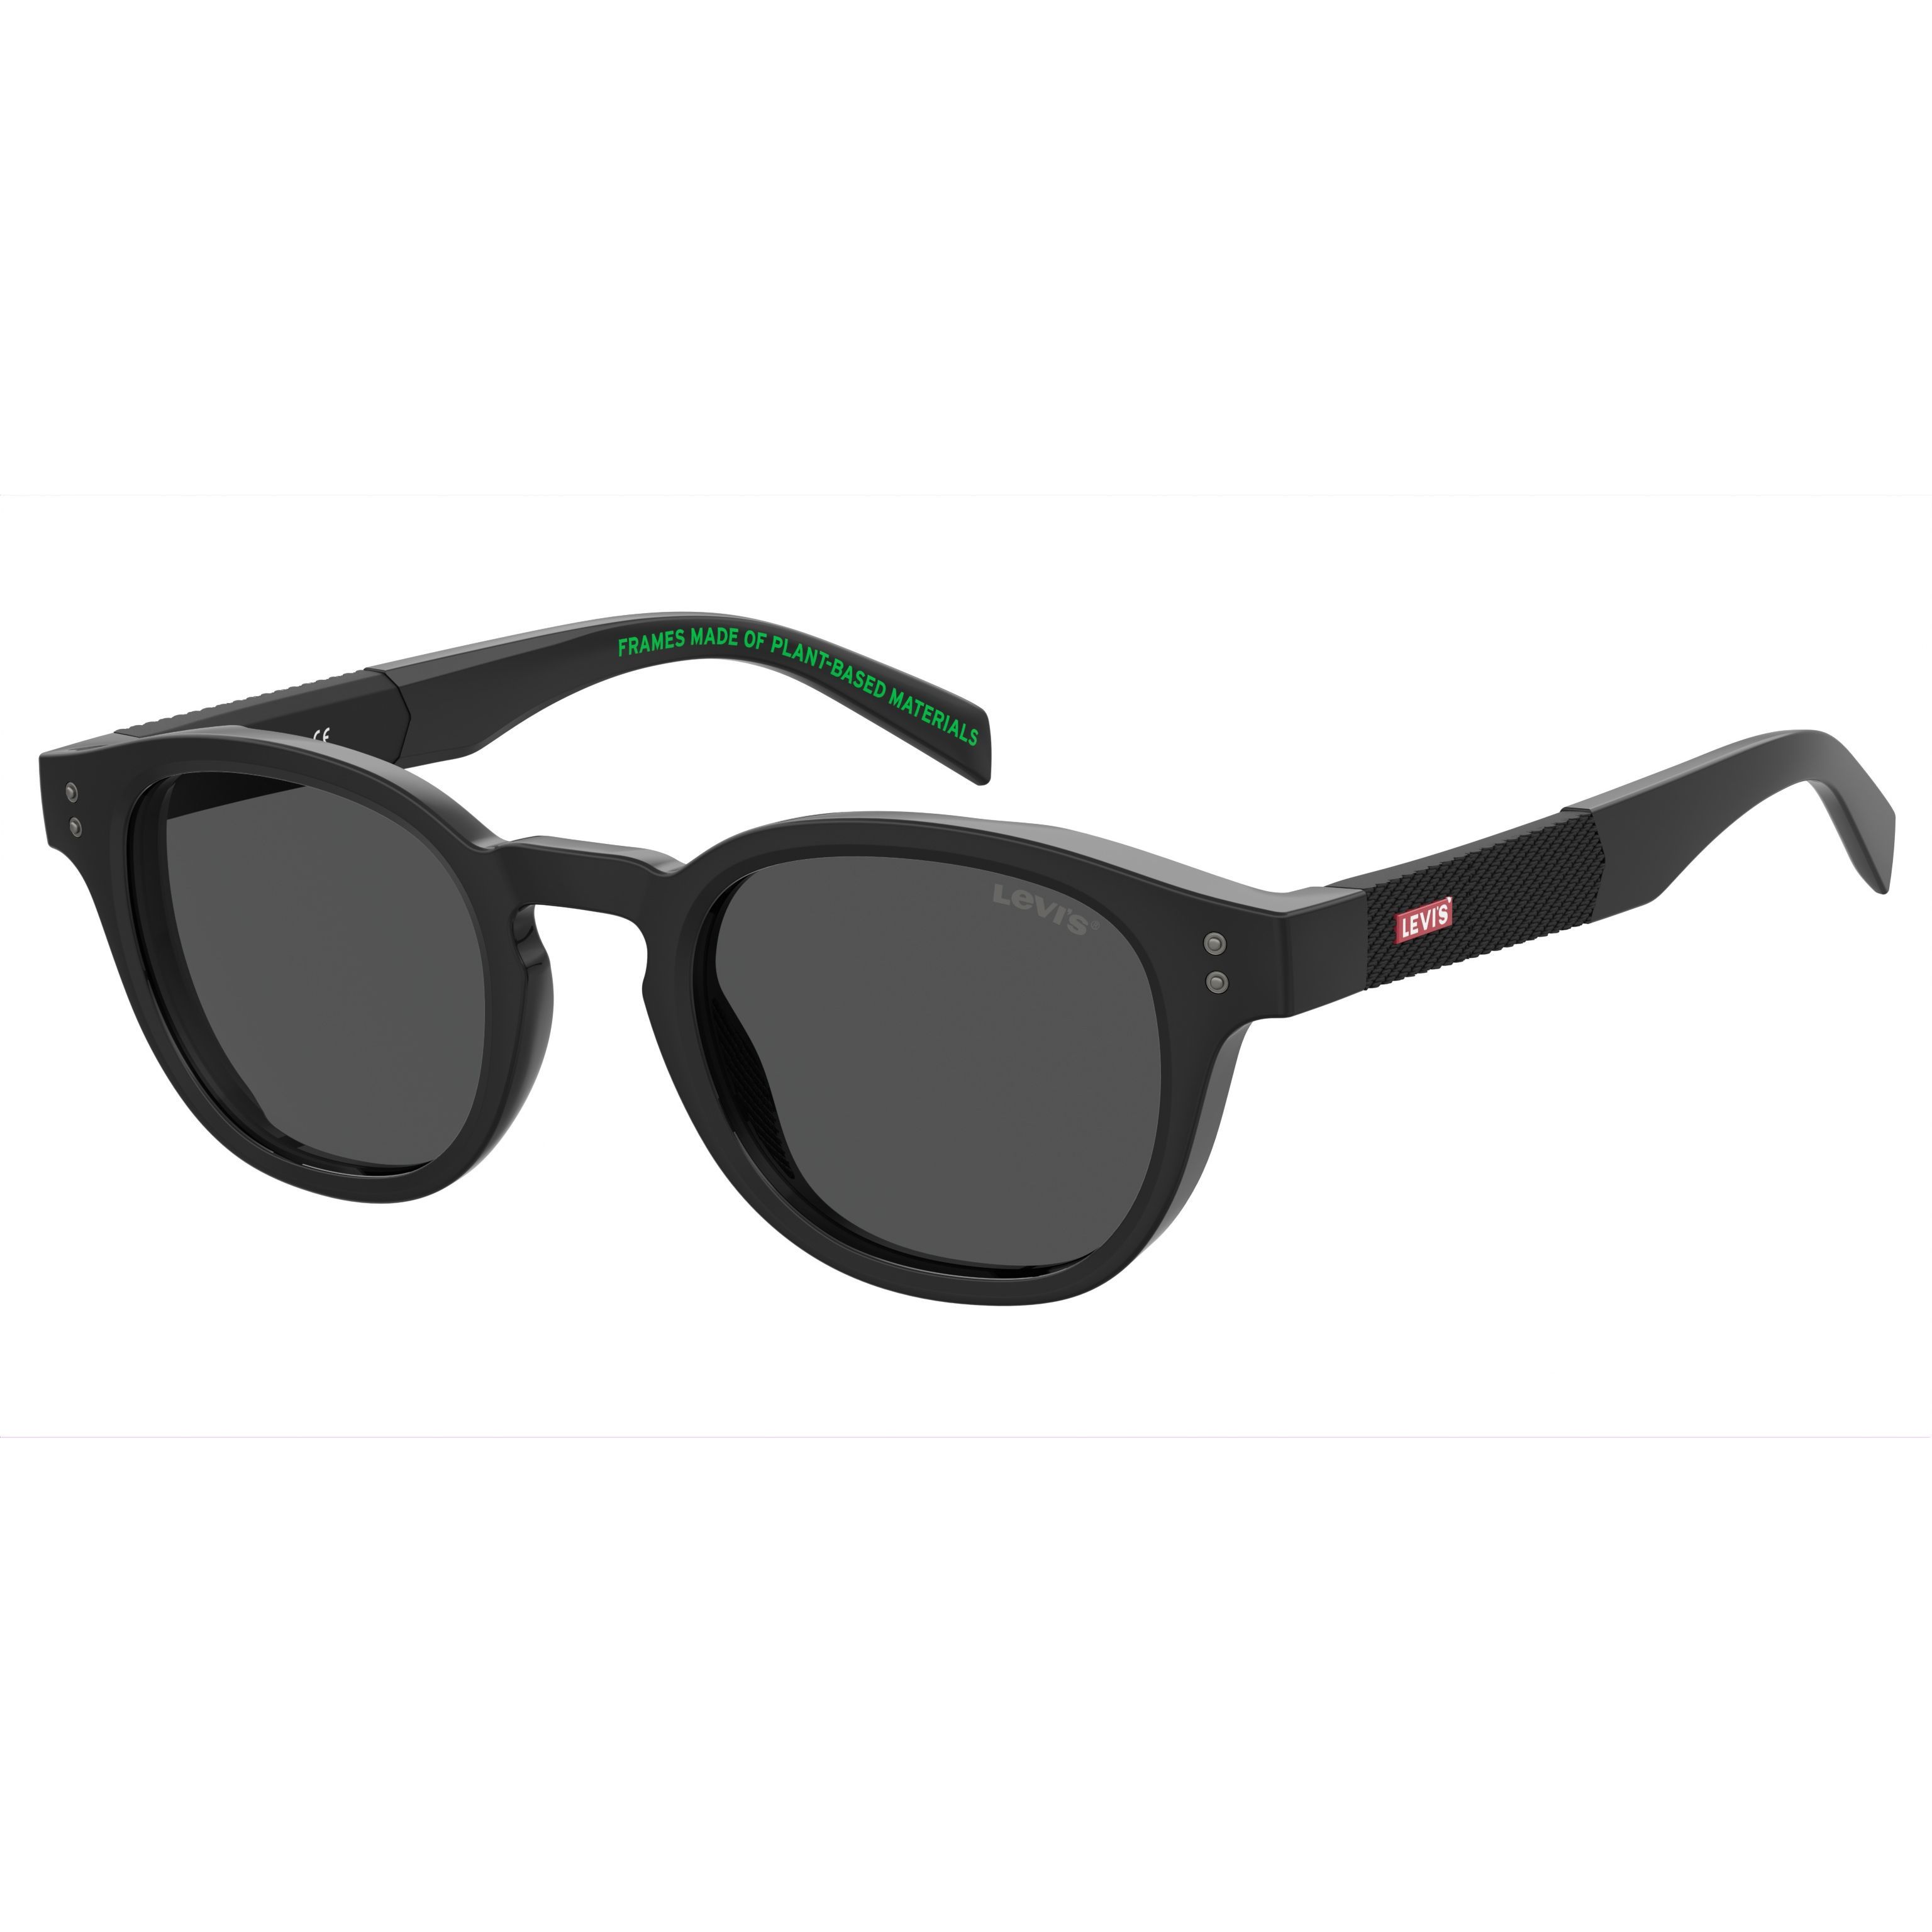 LV 5060 S Round Sunglasses 807 IR - size 48